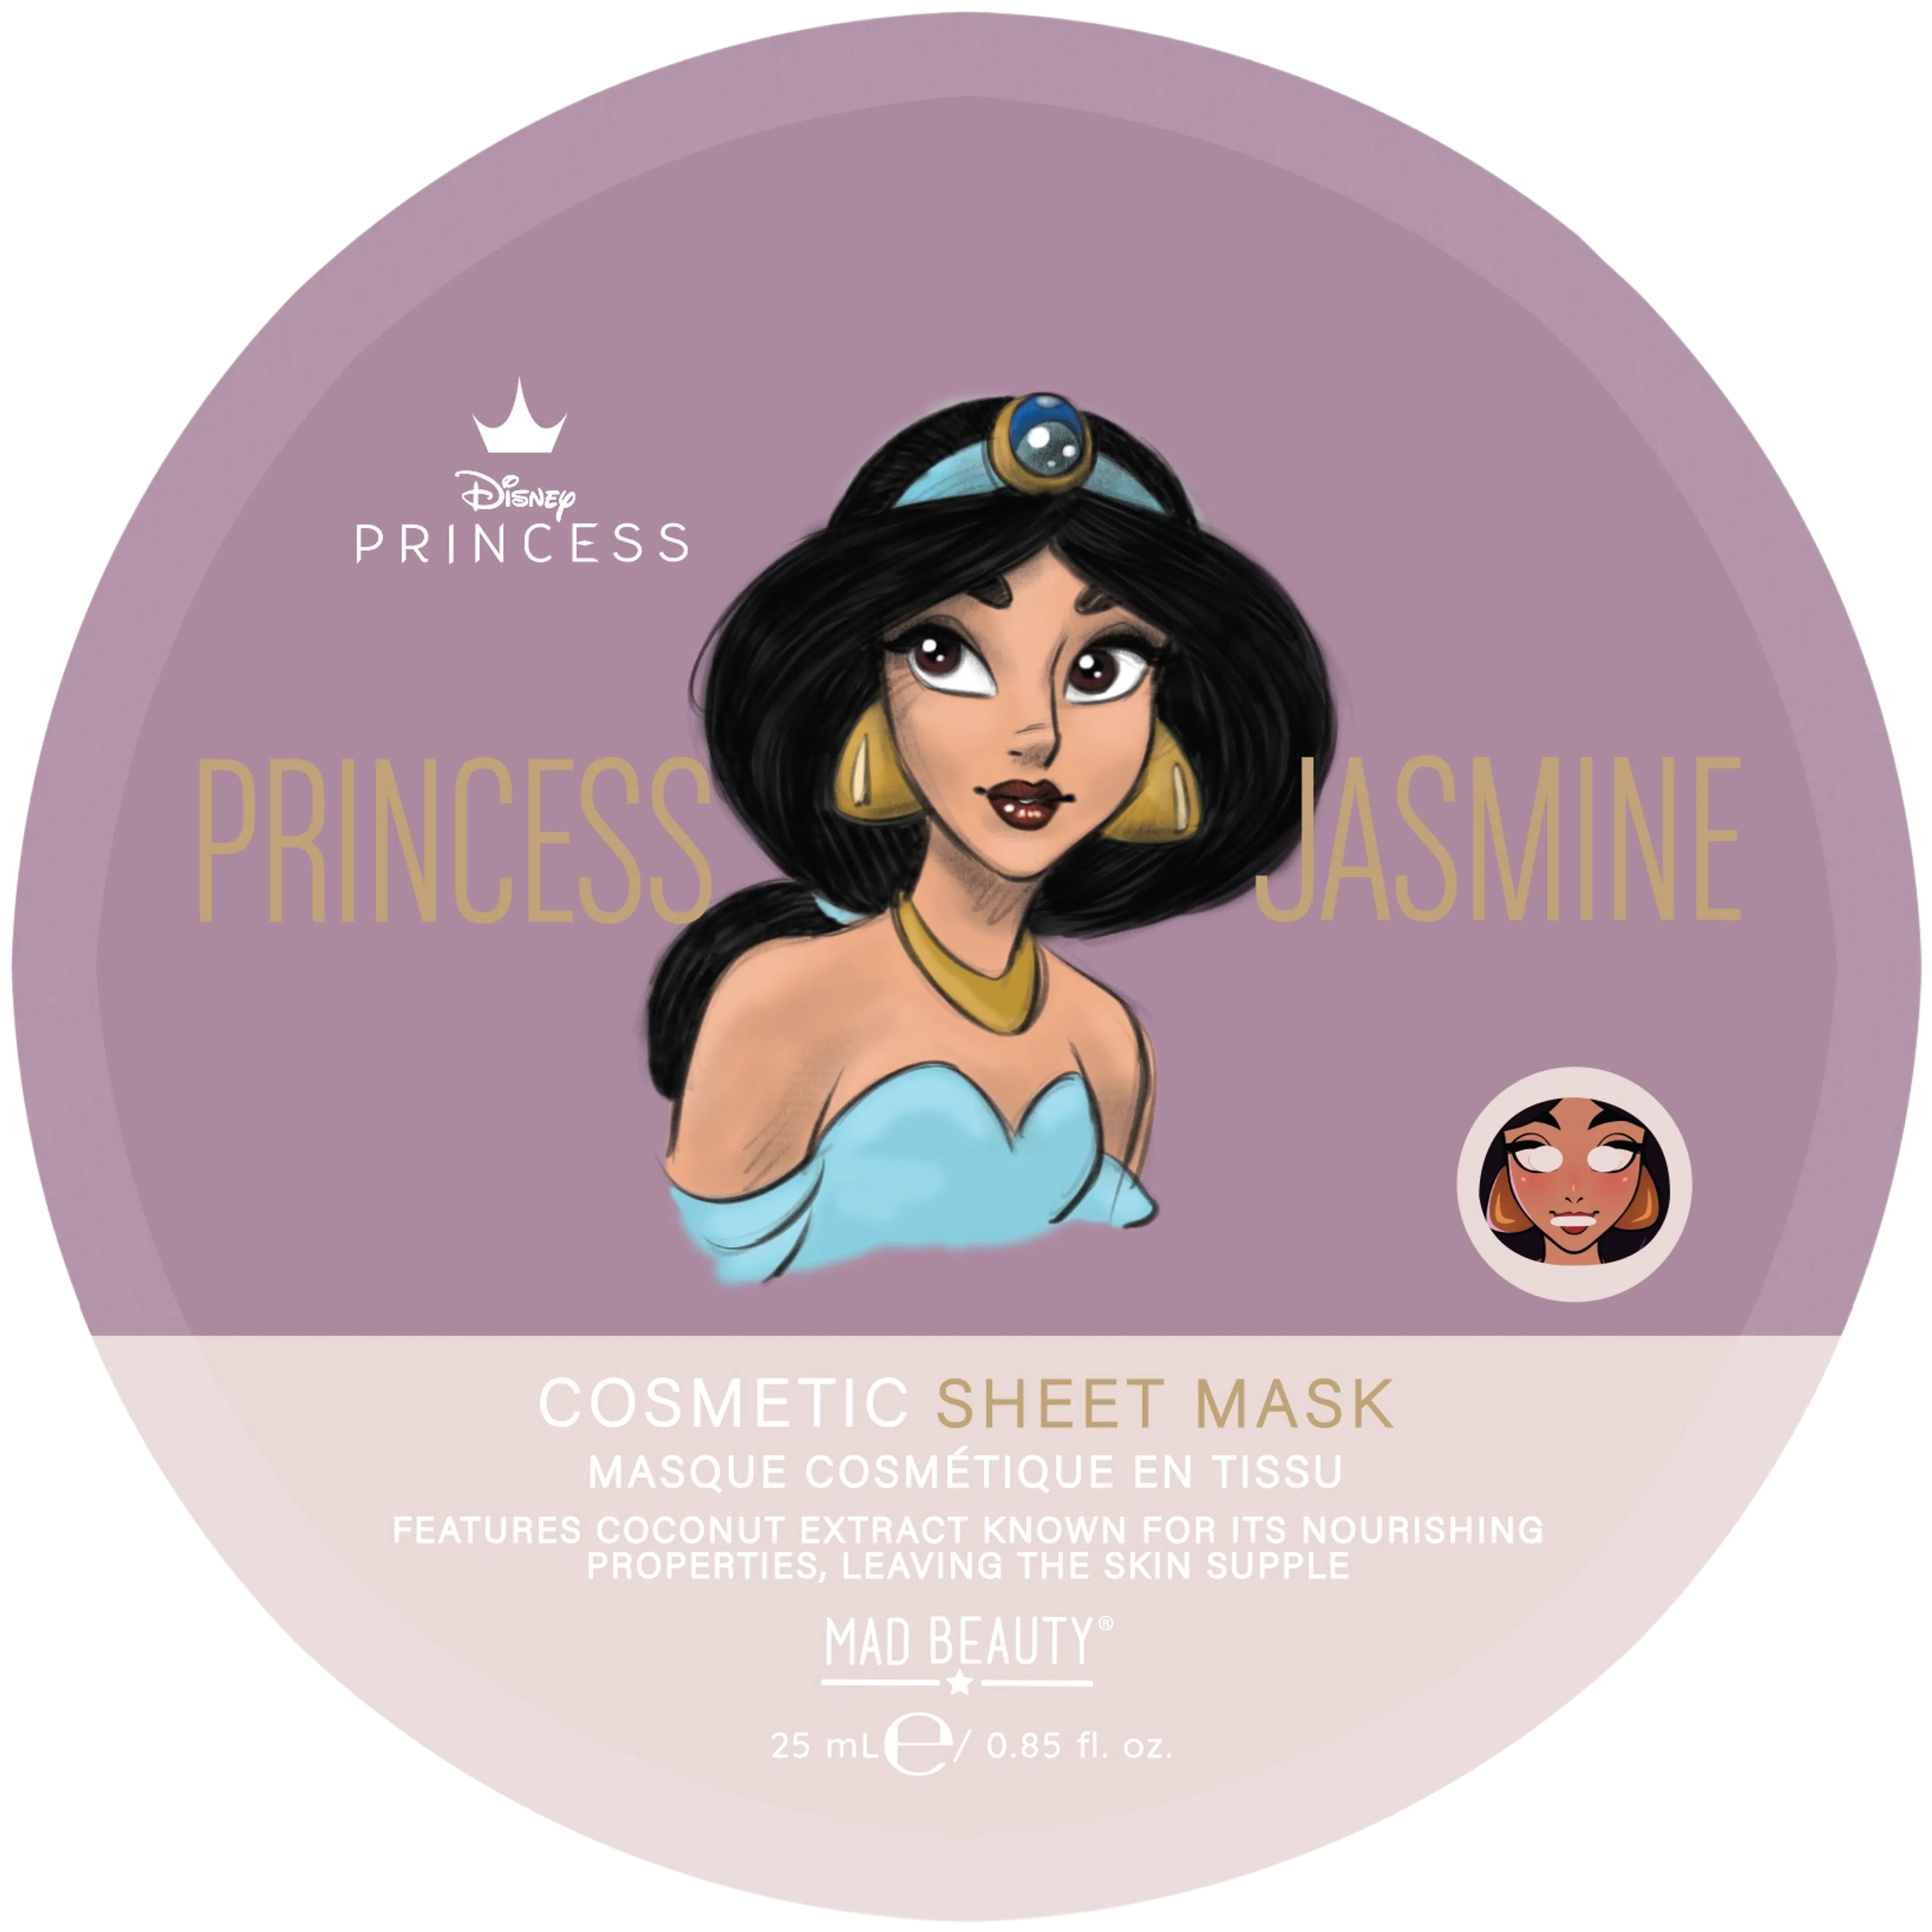 Mad Beauty Pure Princess Jasmine Cosmetic Sheet Mask